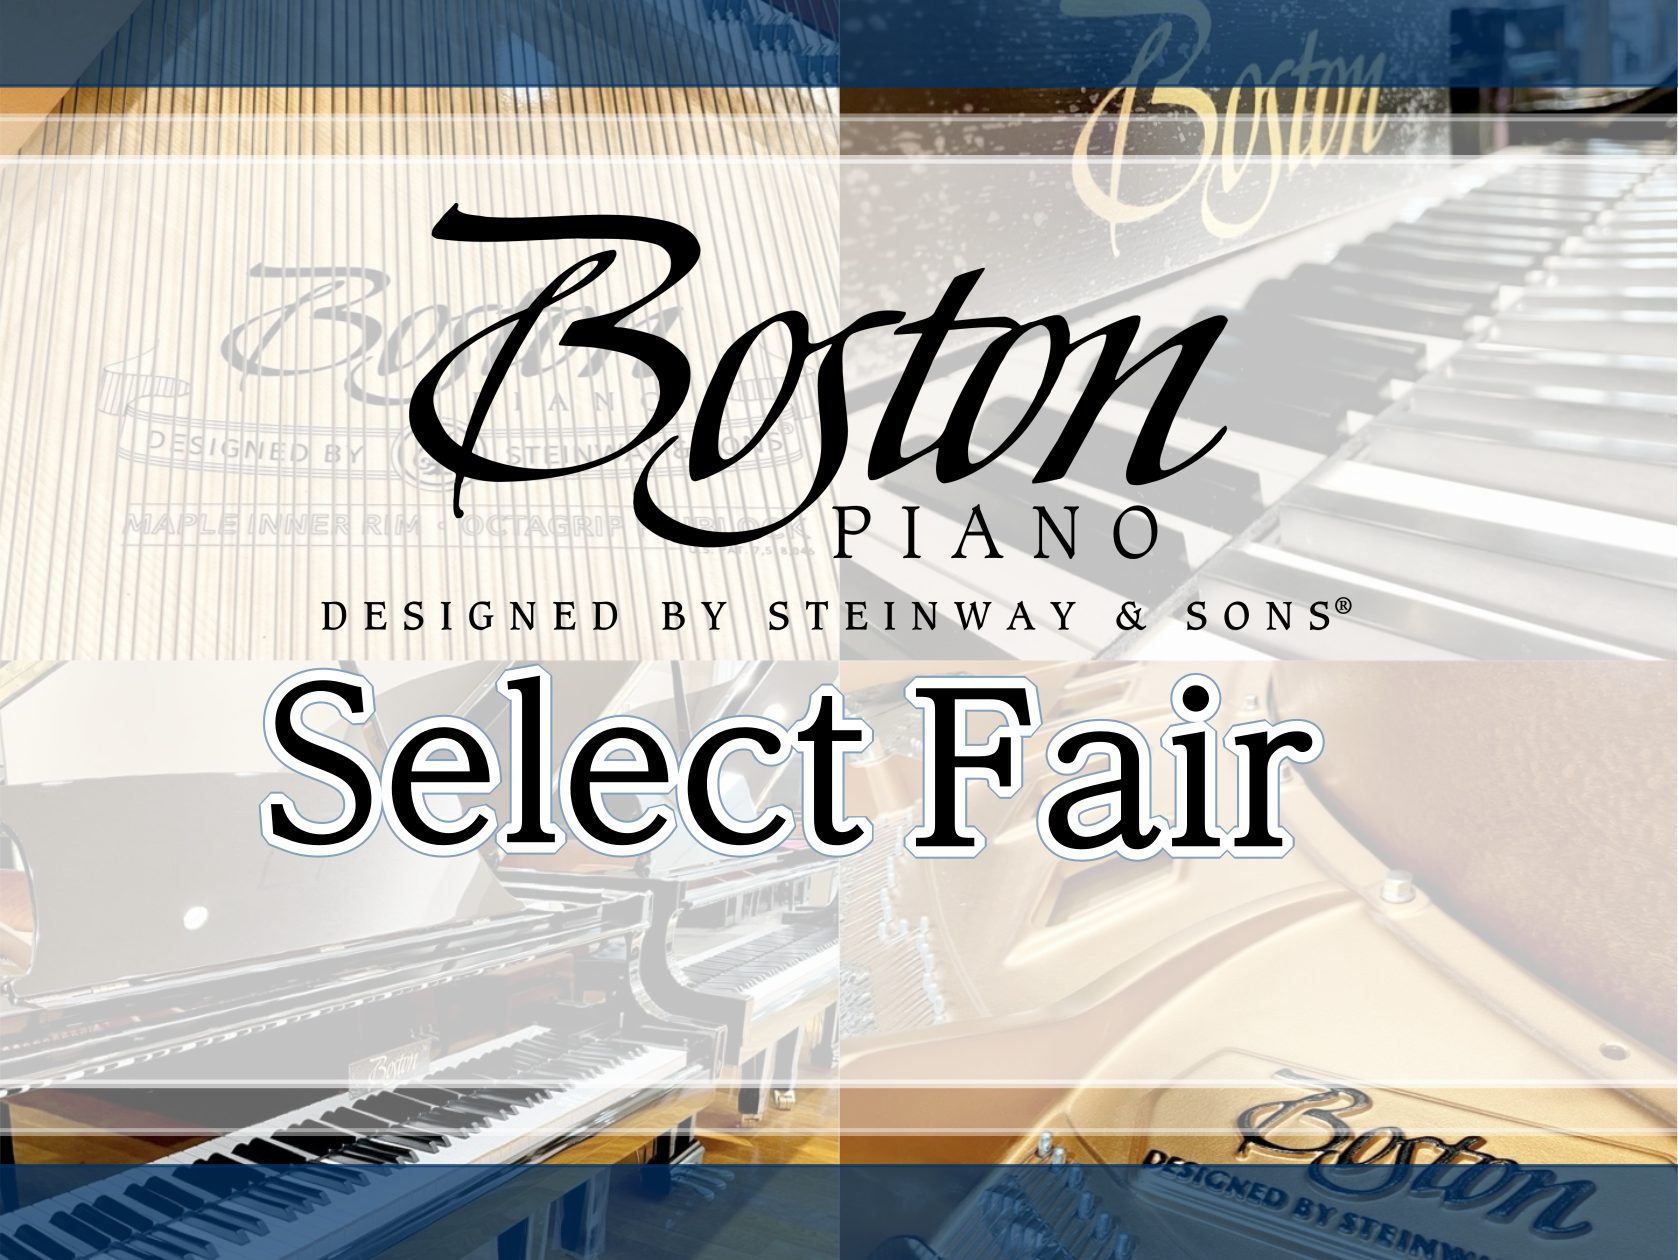 CONTENTSBOSTON‐ボストン‐ピアノとは展示ラインナップグランドピアノアップライトピアノ仙台泉パークタウンタピオ店 ピアノラインナップピアノ イベントインフォメーションBOSTON‐ボストン‐ピアノとは BOSTON‐ボストン‐は、スタインウェイ＆サンズ独自の特許技術と専門知識を駆使して設 […]